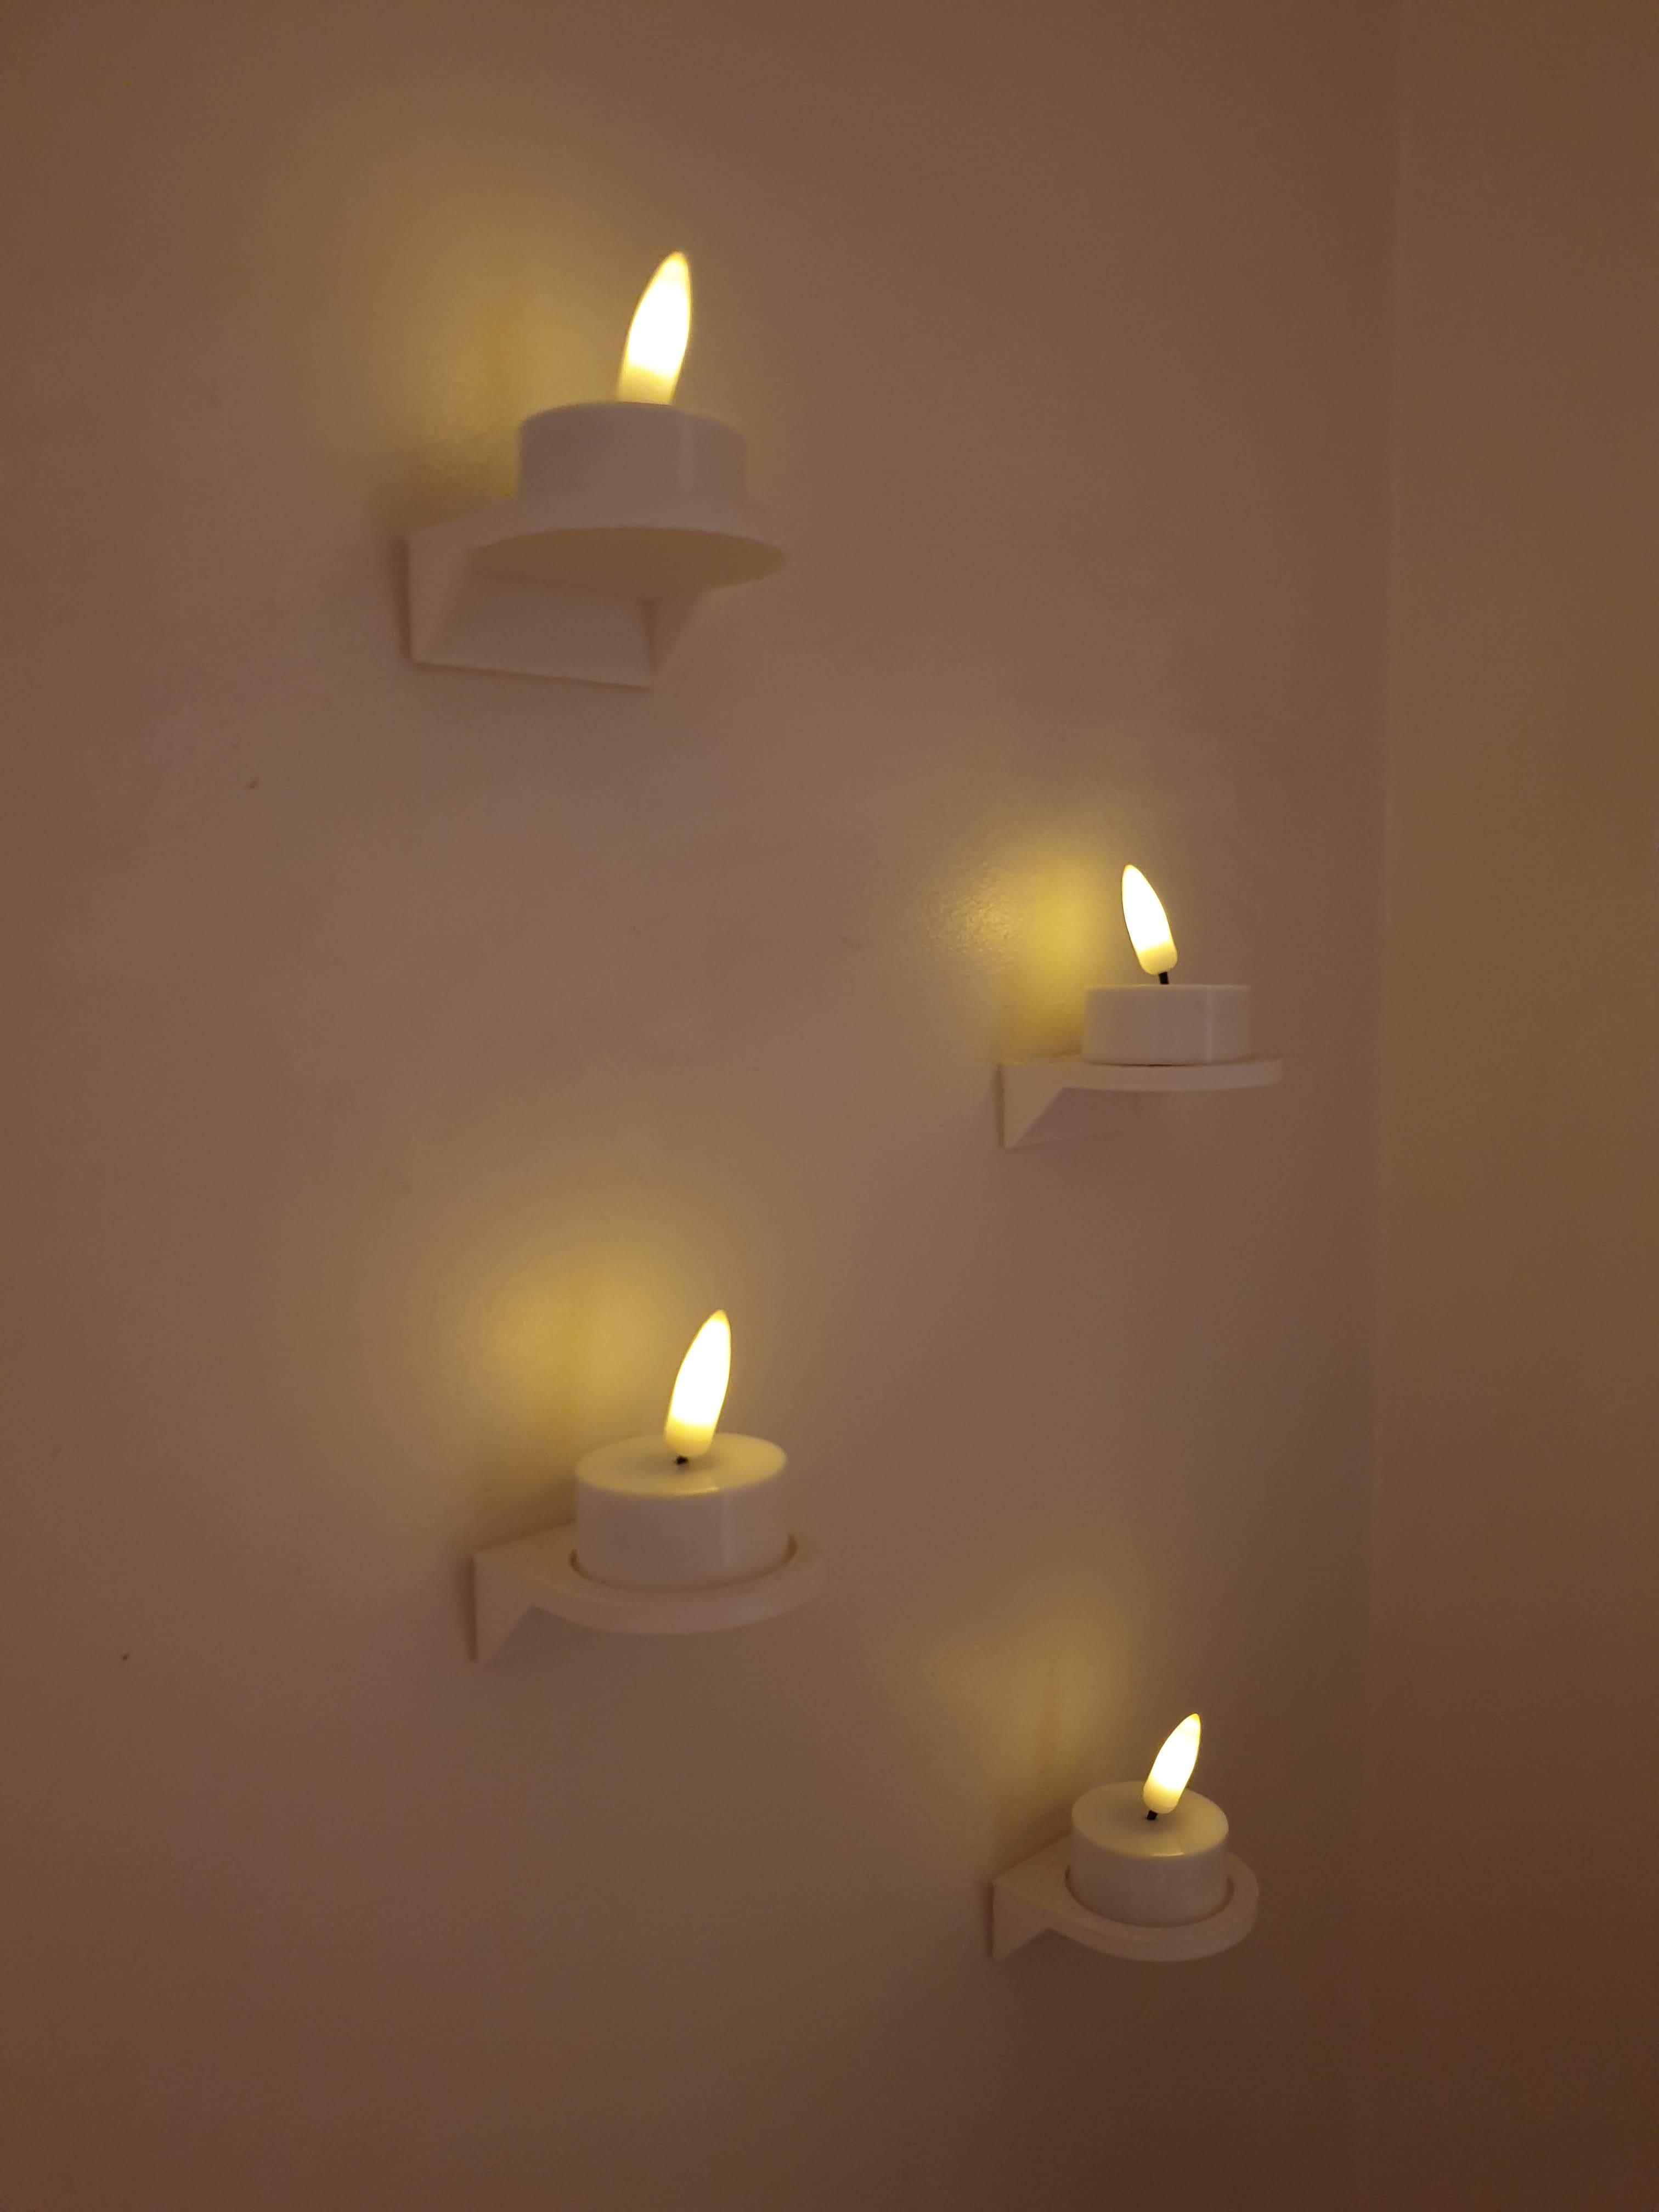 Simple Tealight Shelf 3d model